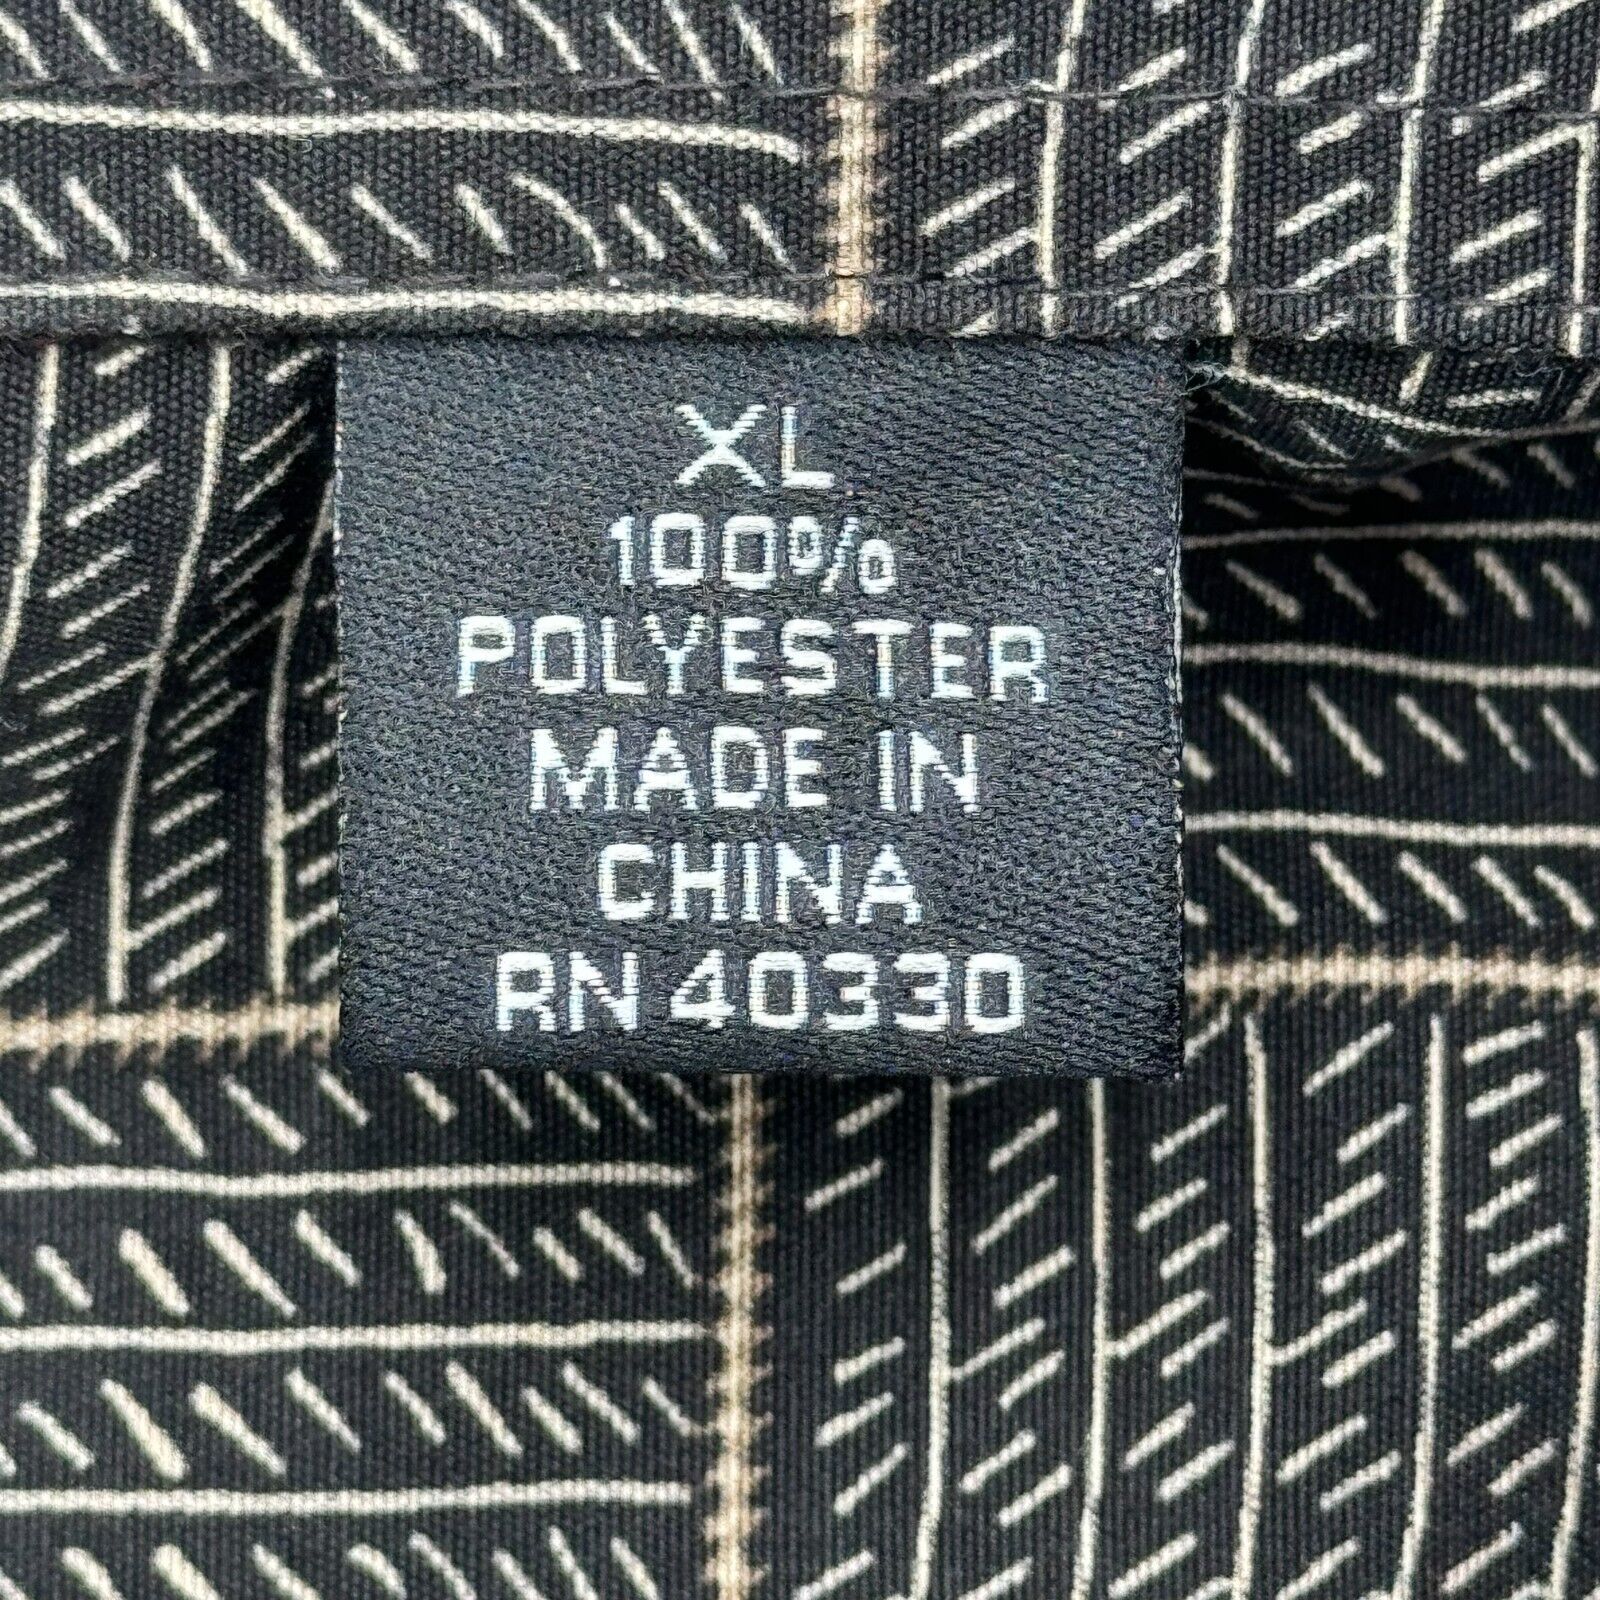 Haggar Luxury Microfiber Short Sleeve Button Up Shirt Black White Pattern Men XL